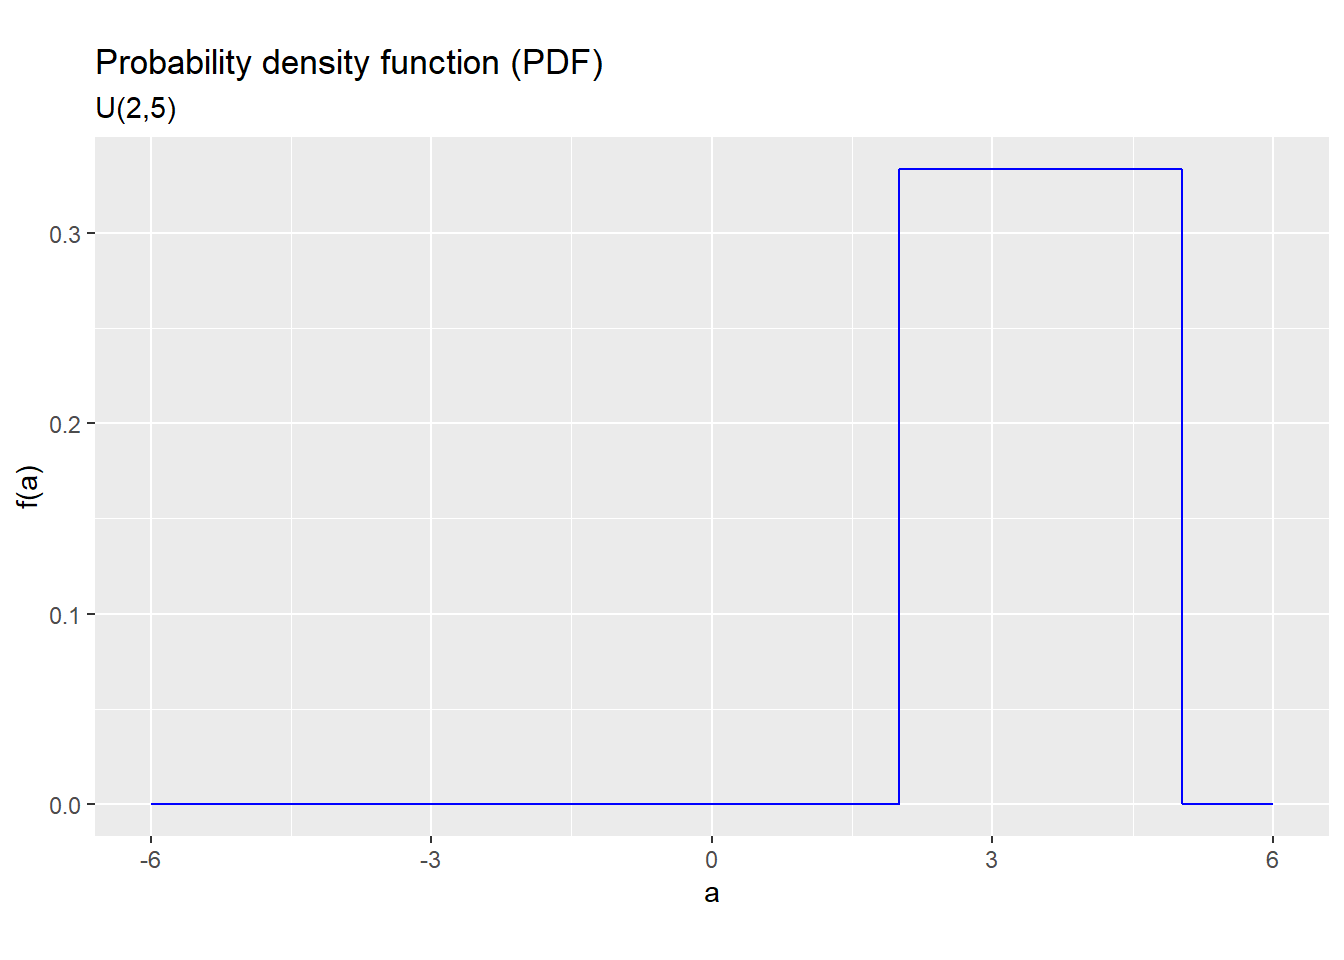 *PDF for the U(2,5) distribution*